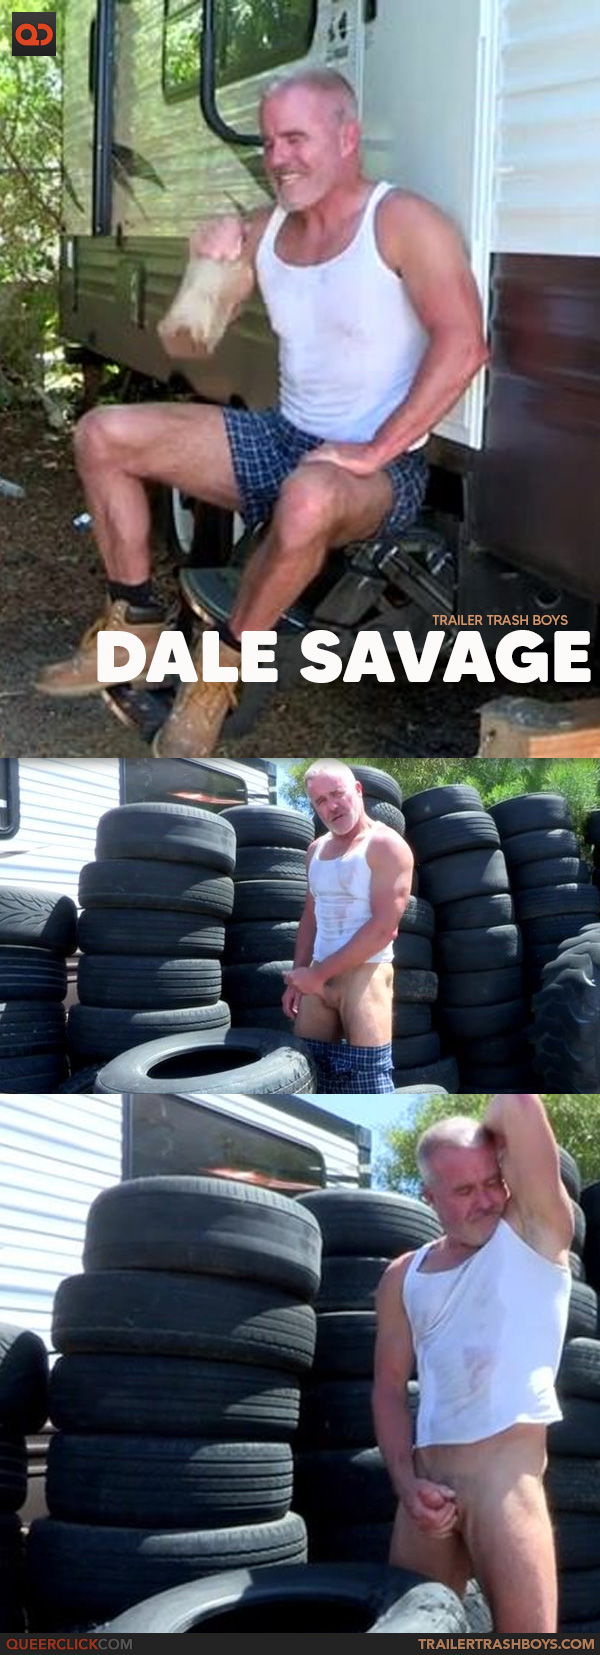 Trailer Trash Boys: Dale Savage